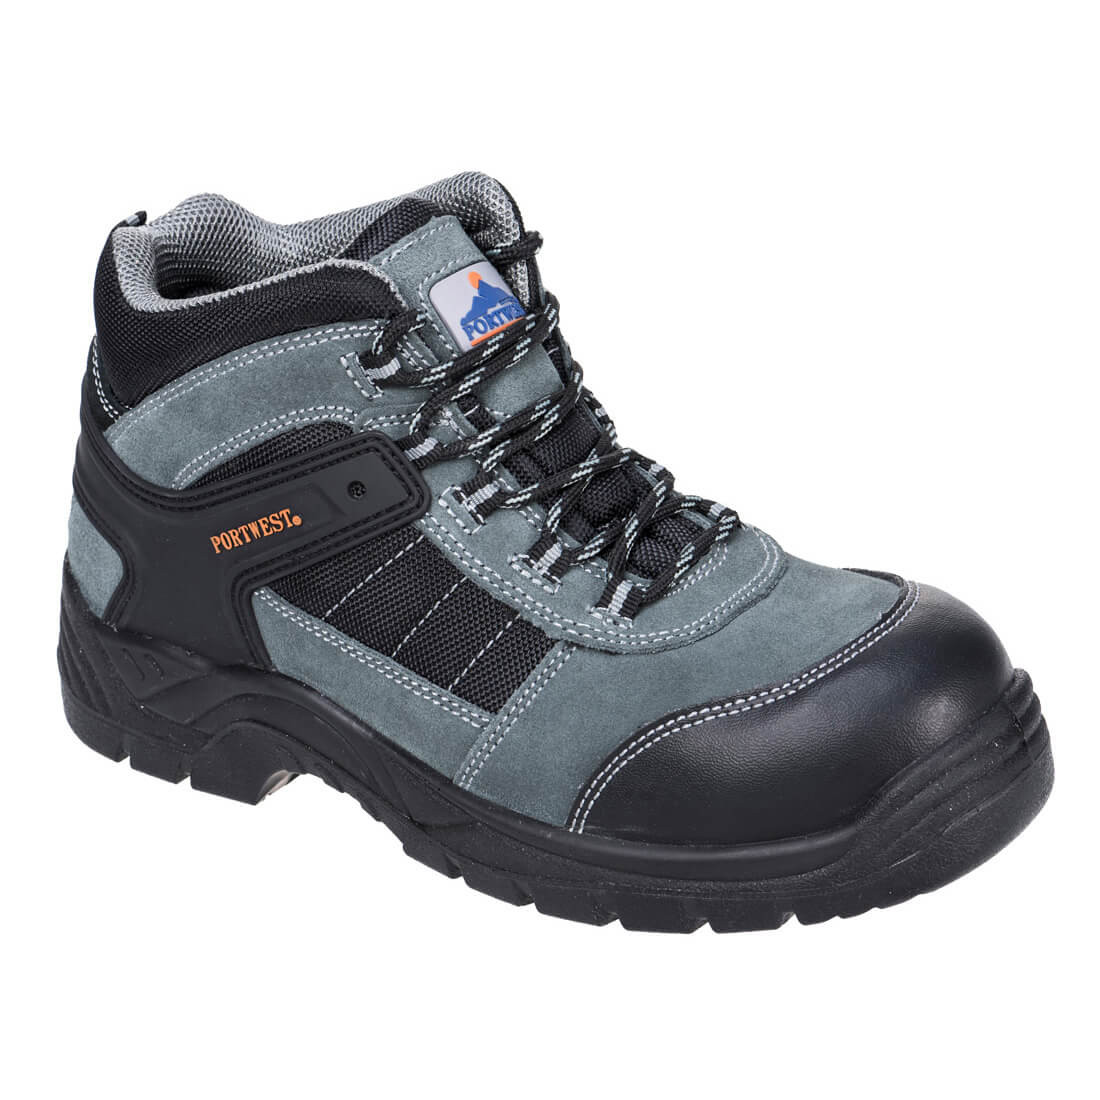 Compositelite™ Trekker Plus Boot S1P - Footwear